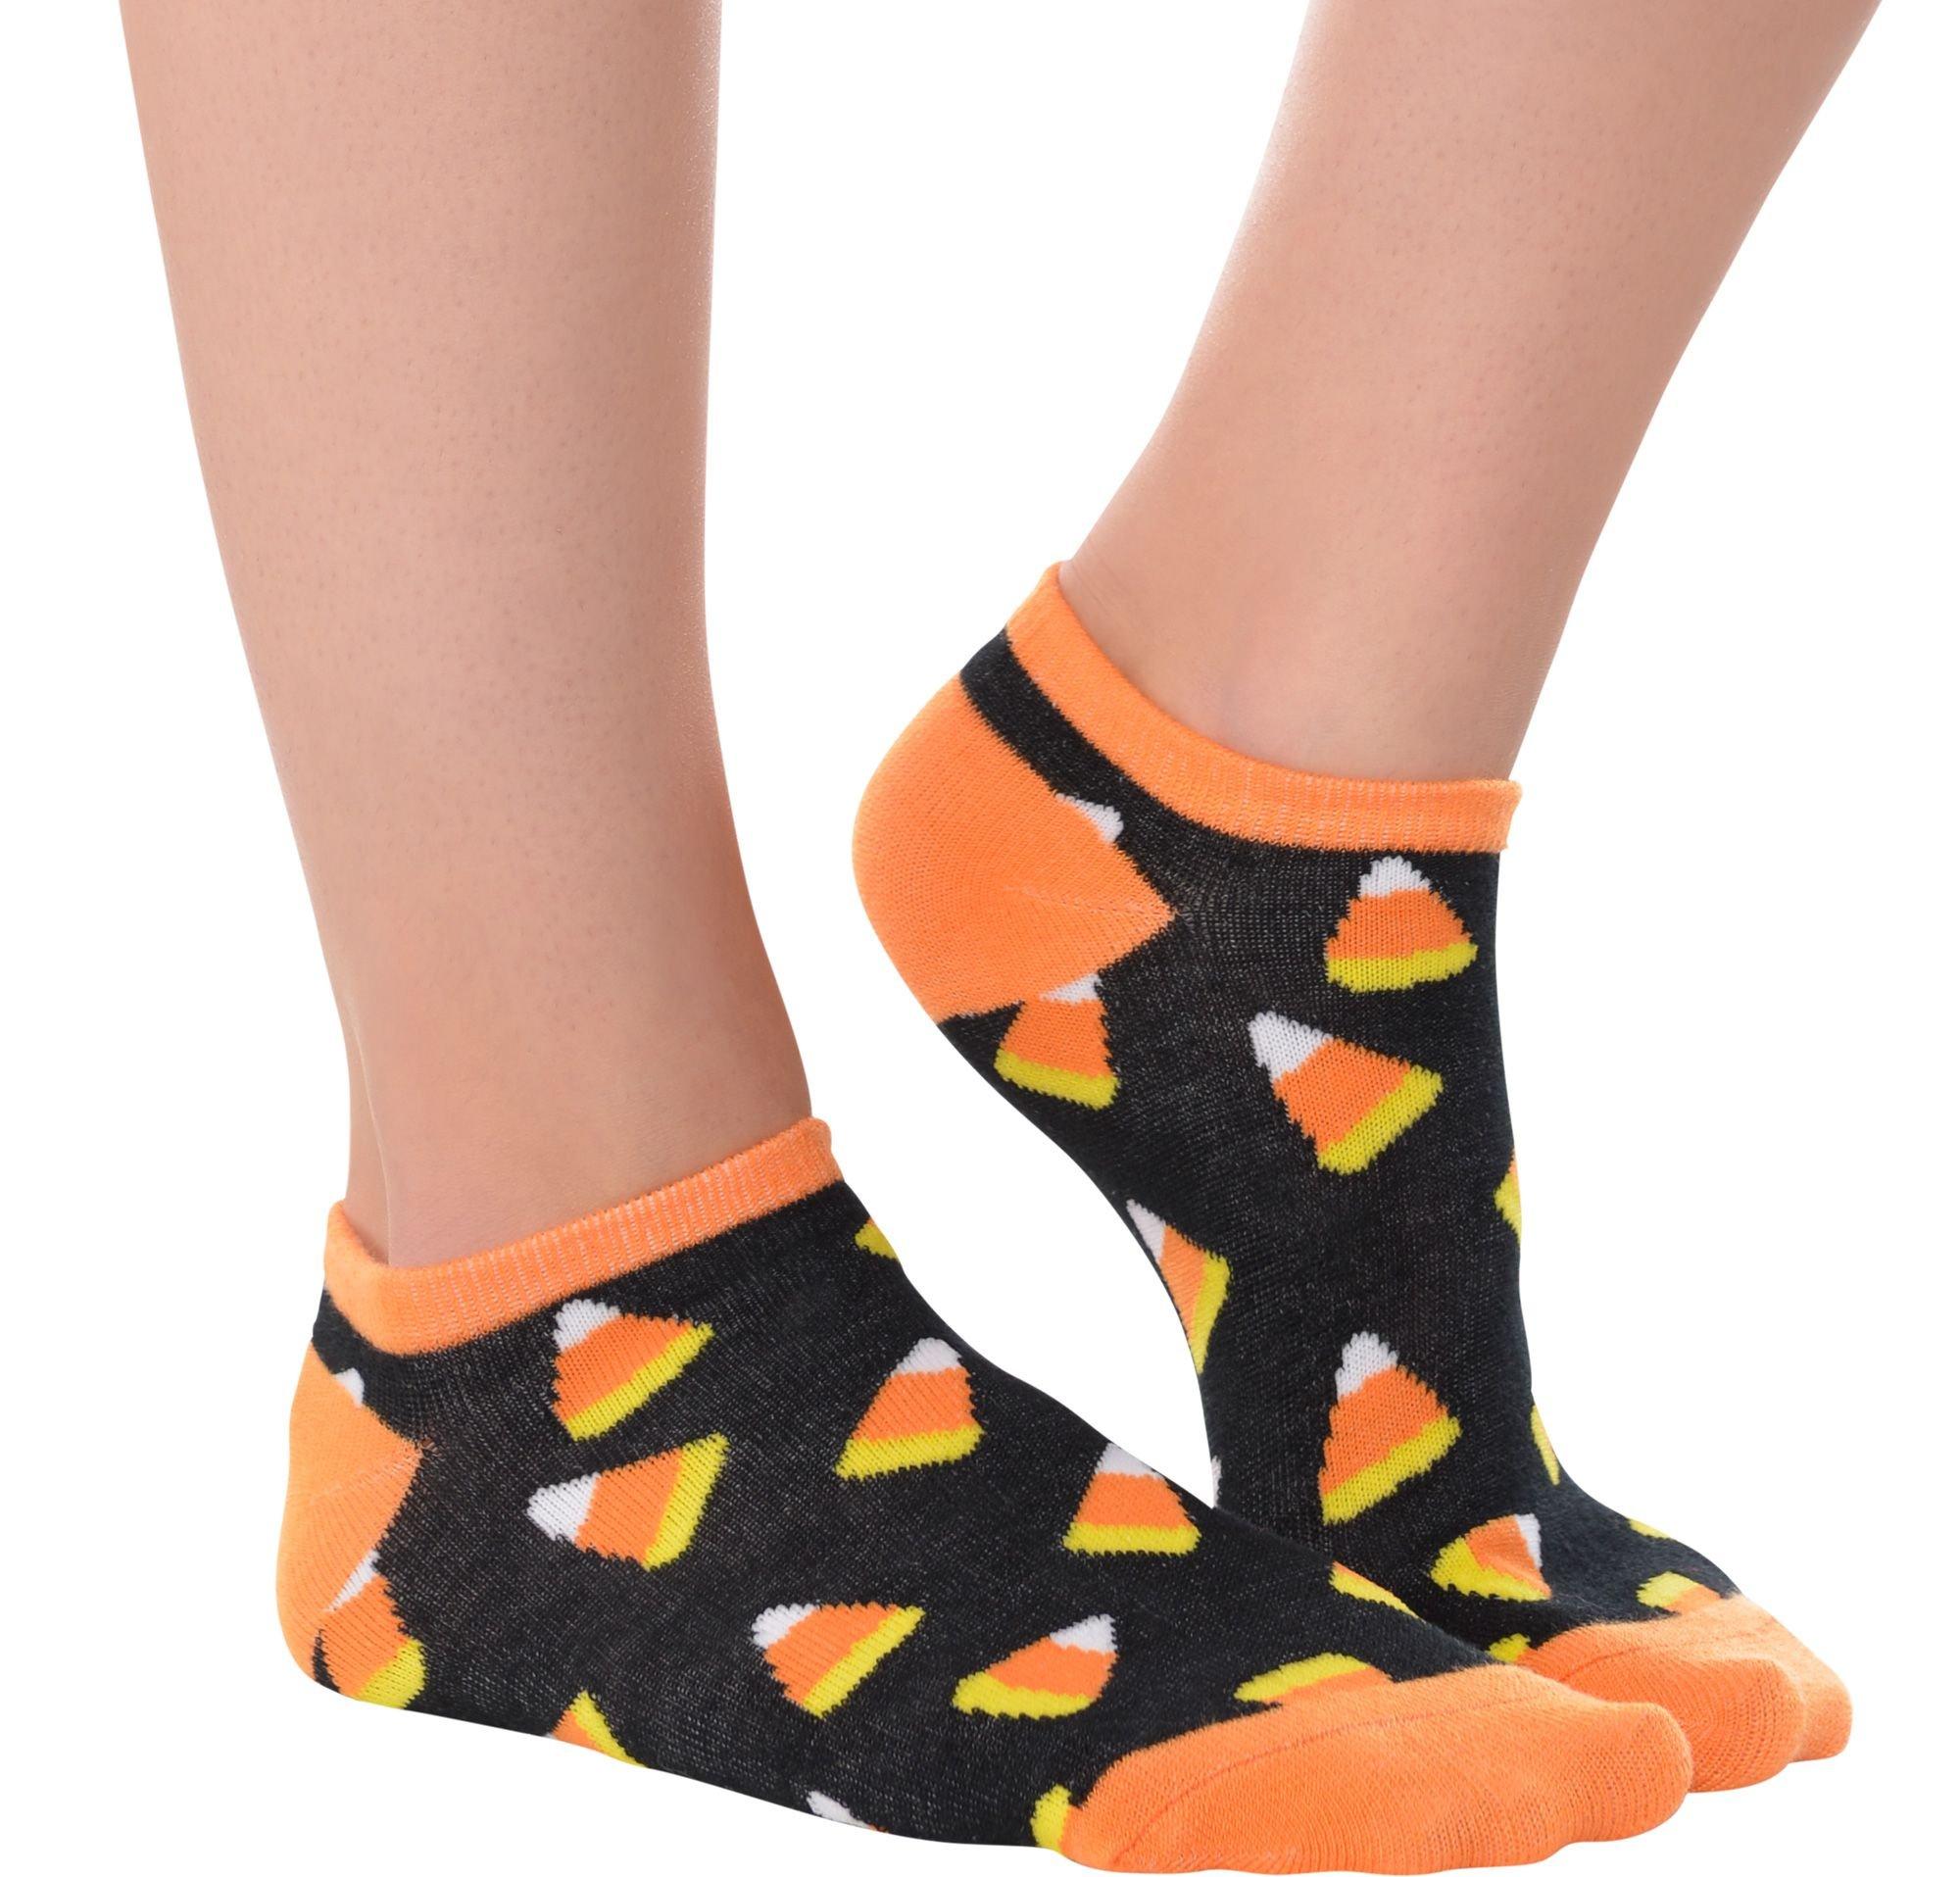 Candy Corn Ankle Socks